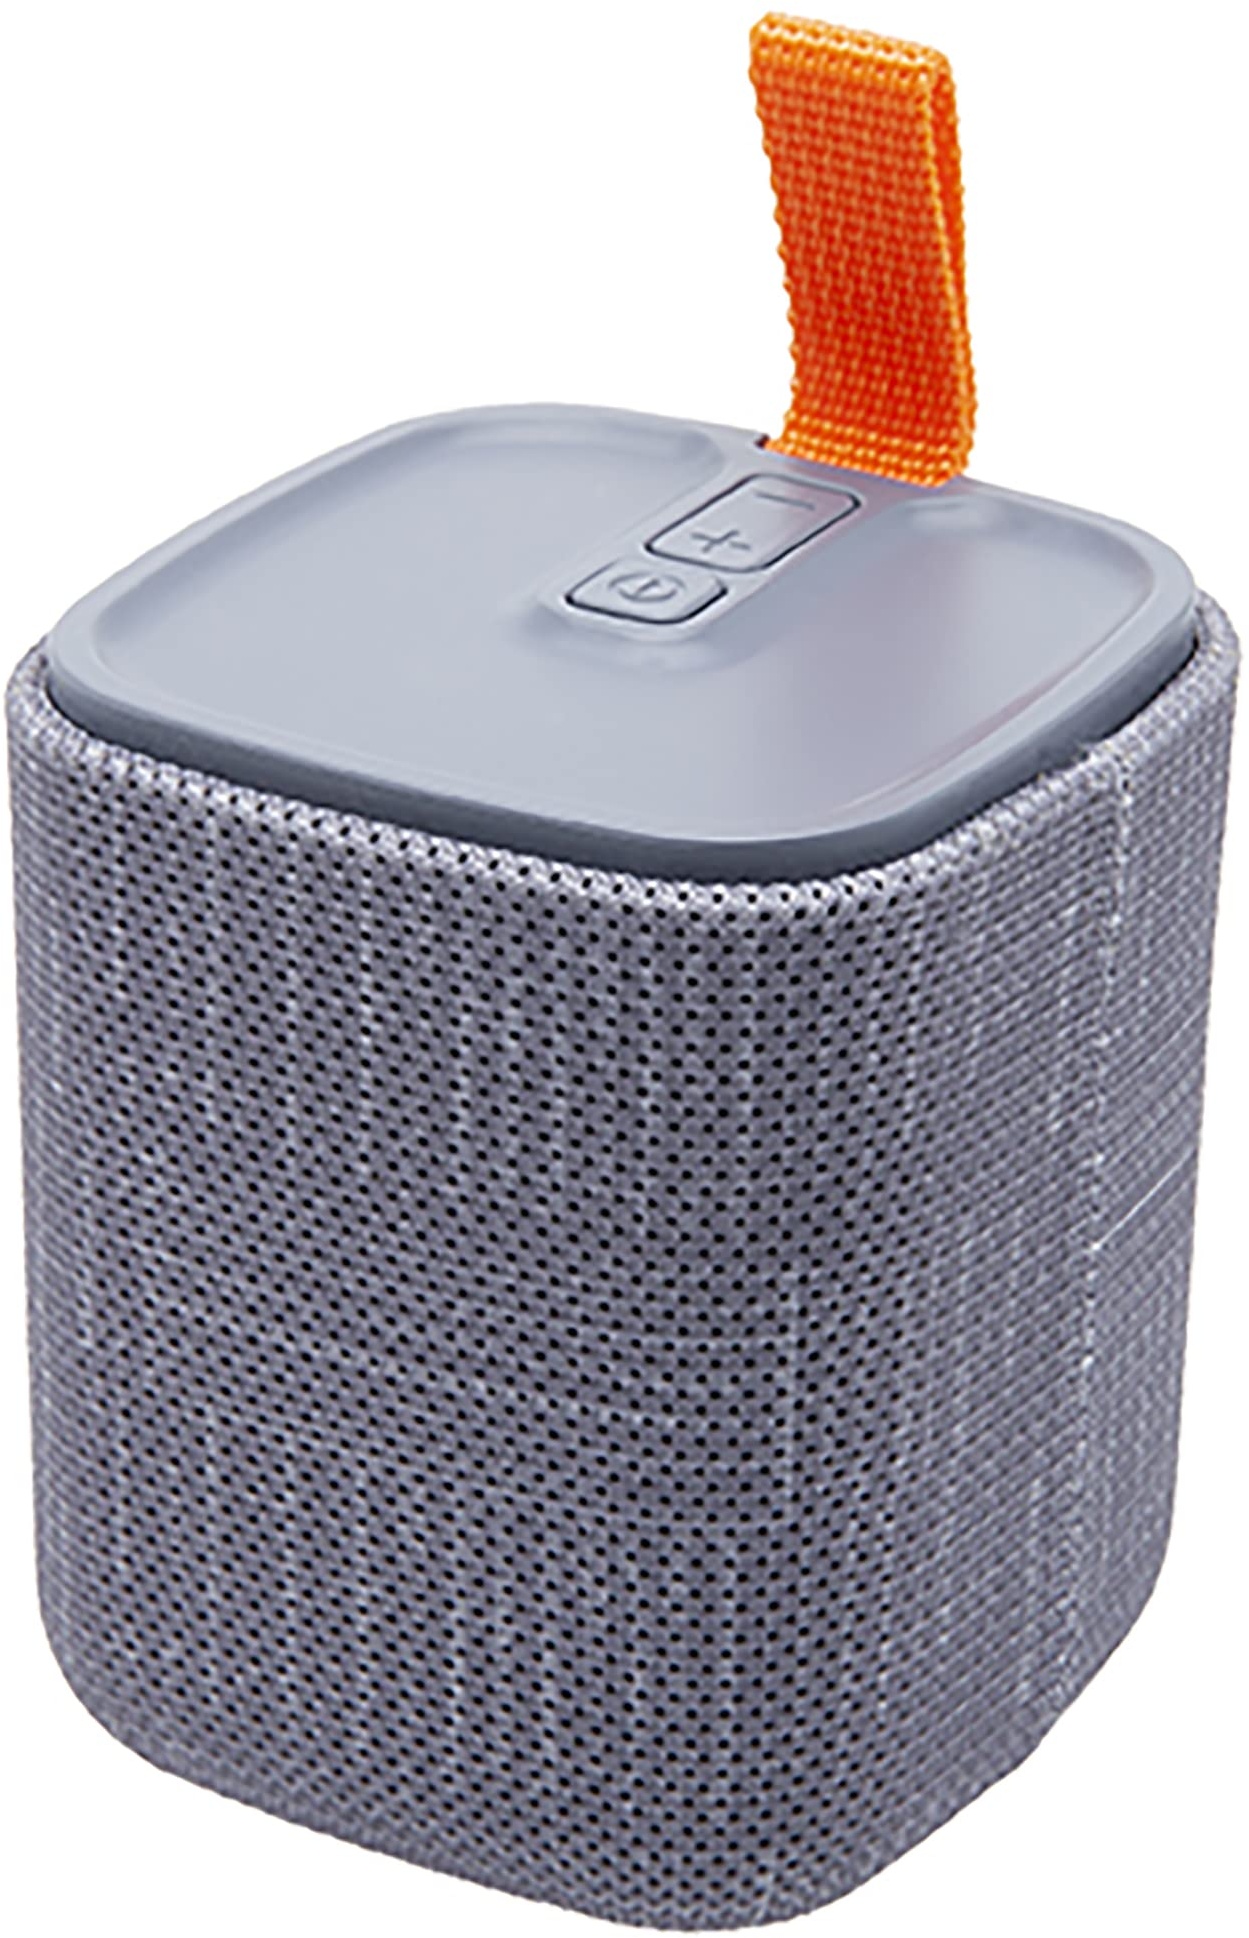 apm Tragbarer Bluetooth-Lautsprecher, Mini-Lautsprecher, kabellos, kompaktes Format, Lautsprecher in trendigem Design, bis zu 8 Stunden Akkulaufzeit, spritzwassergeschützt IPX4, Grau, 571077